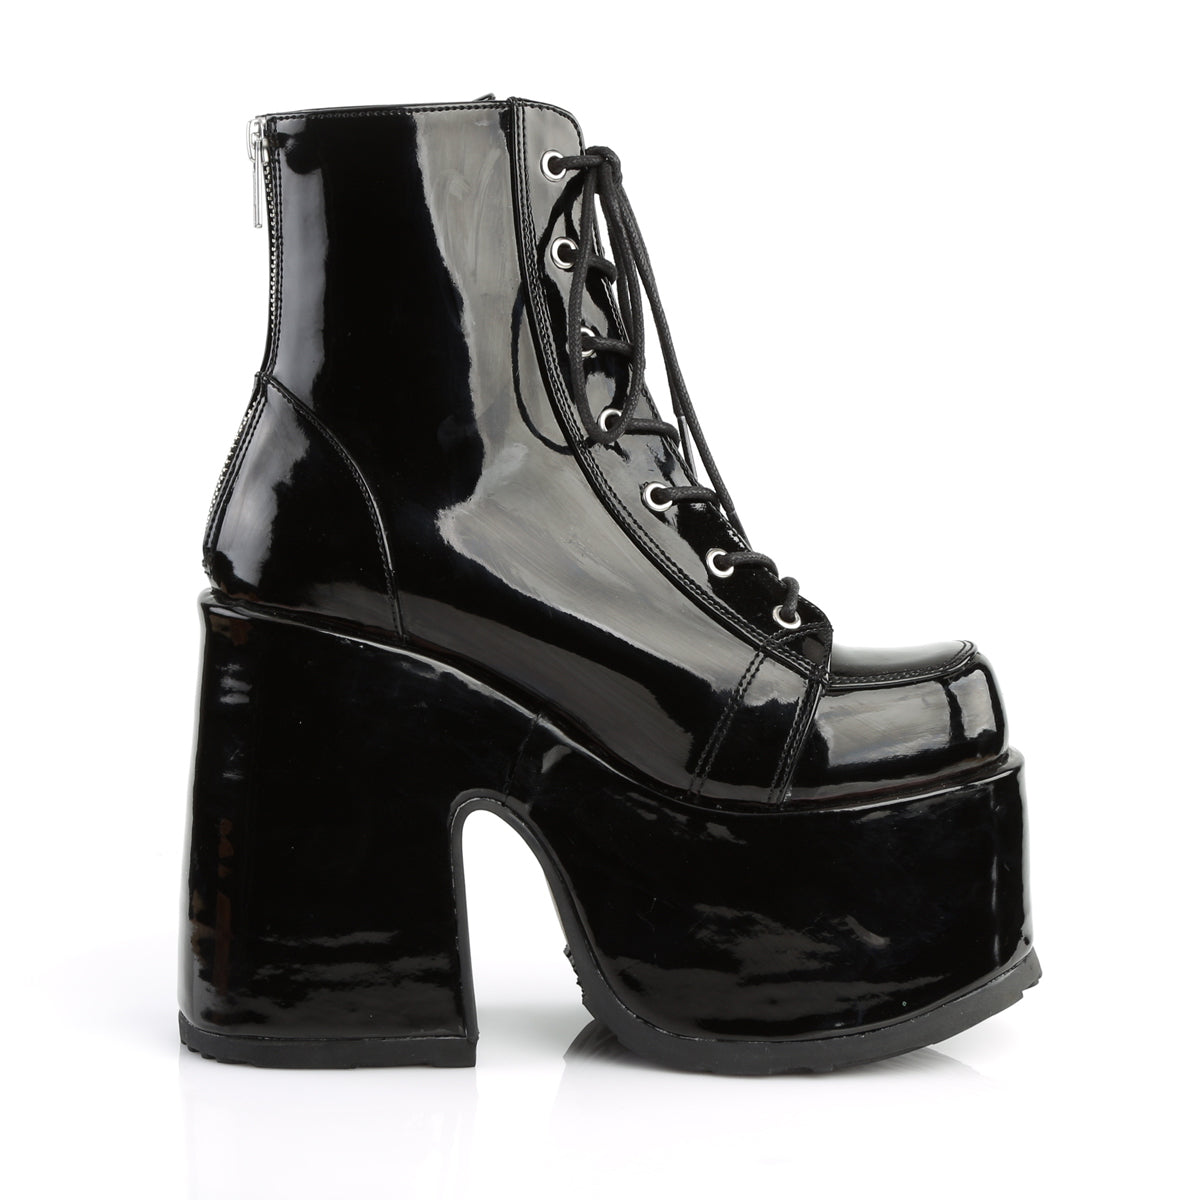 CAMEL-203 Black Patent Ankle Boot Demonia